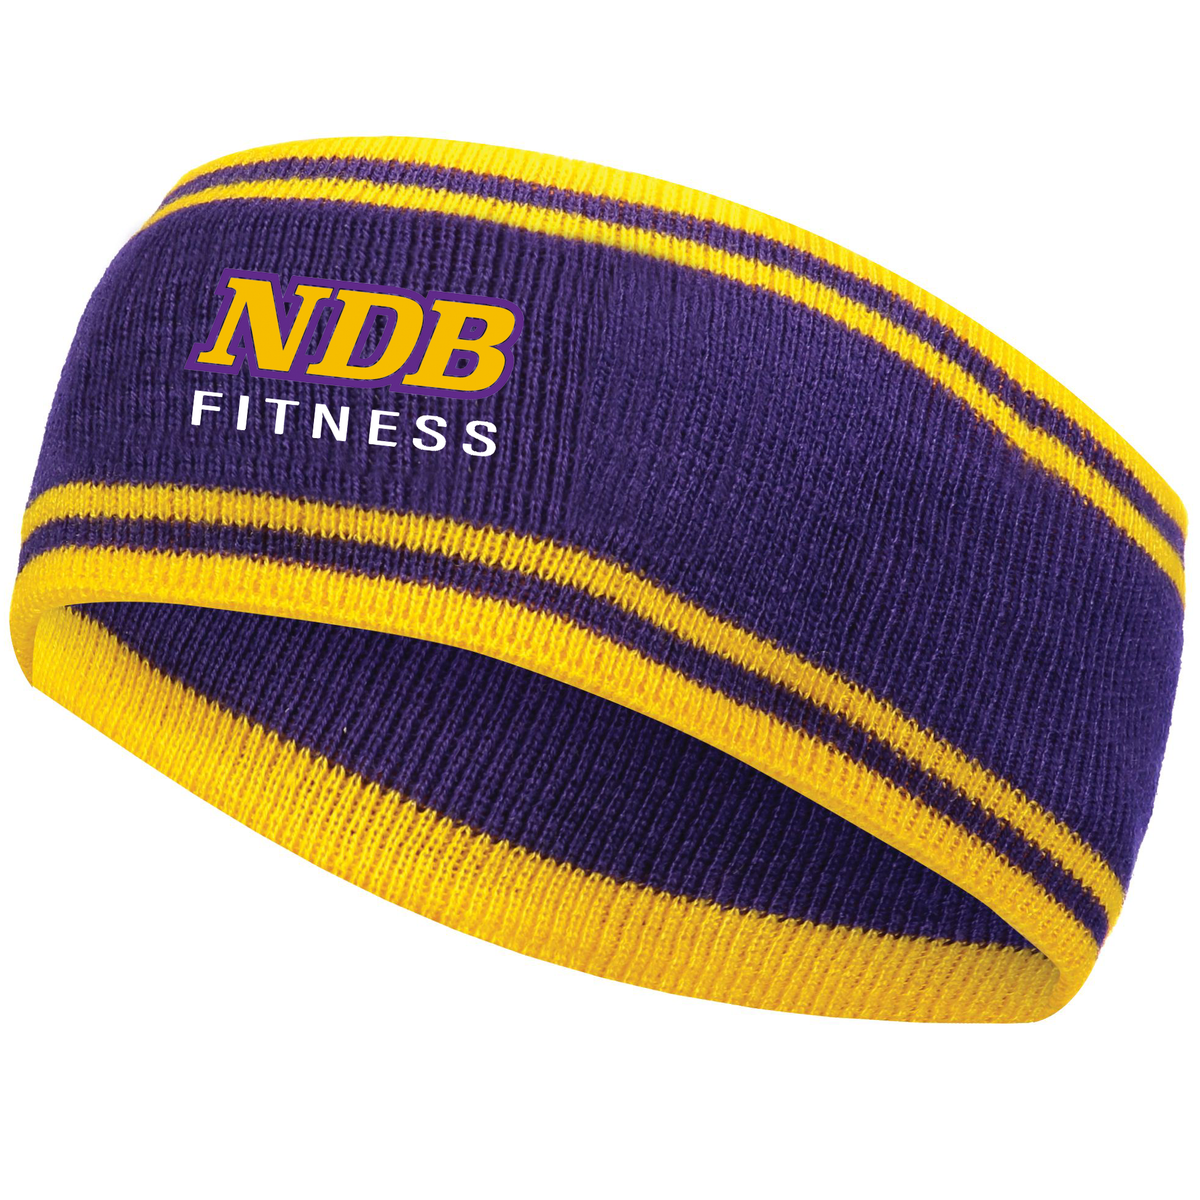 NDB Fitness Homecoming Knit Headband